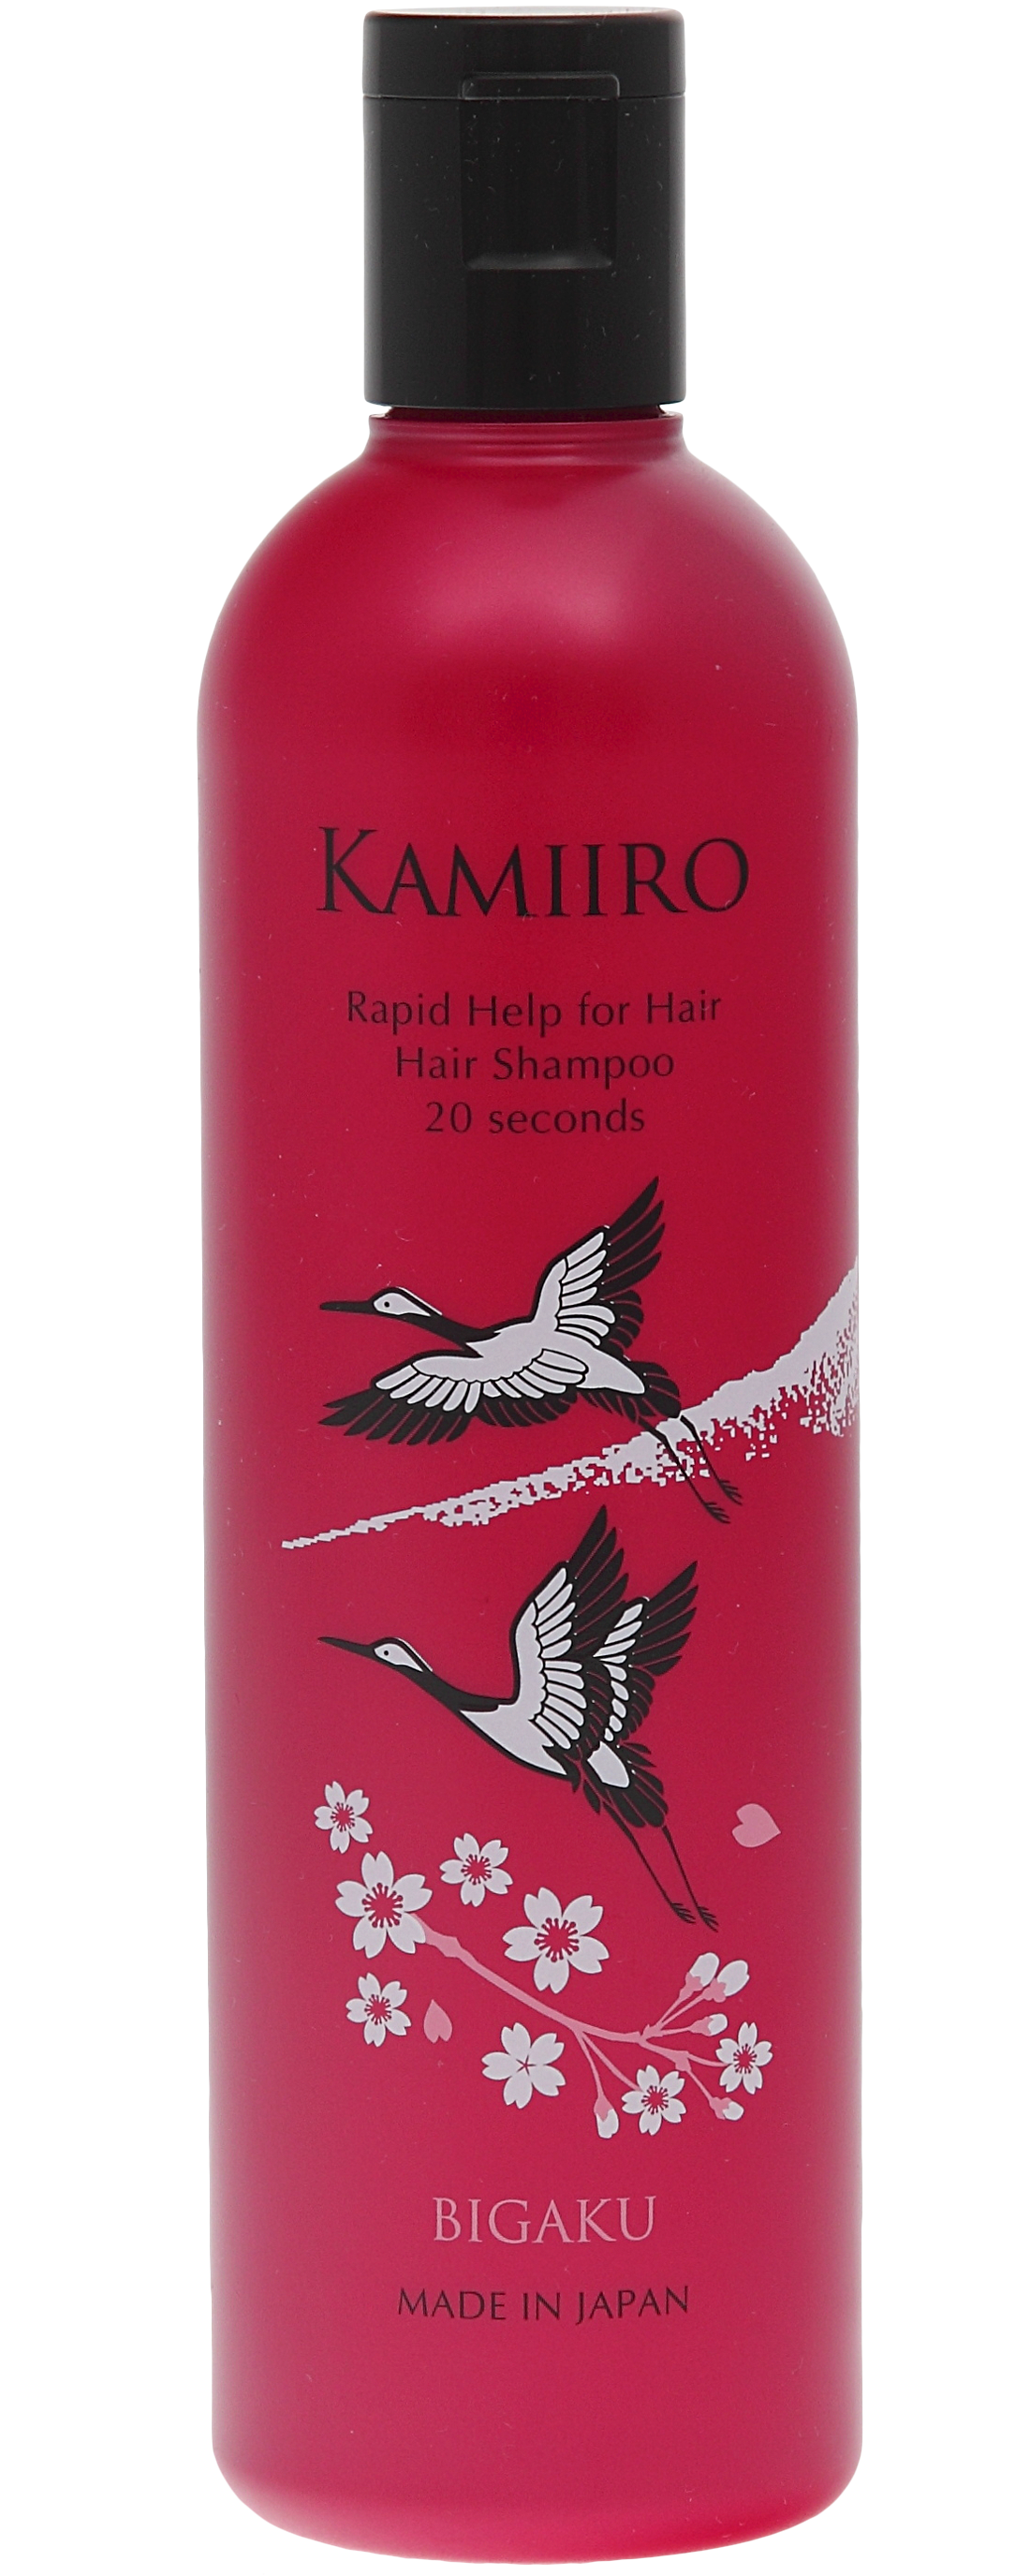 Kamiiro Rapid Help For Hair шампунь Cкорая помощь для волос за 20 секунд, 330мл